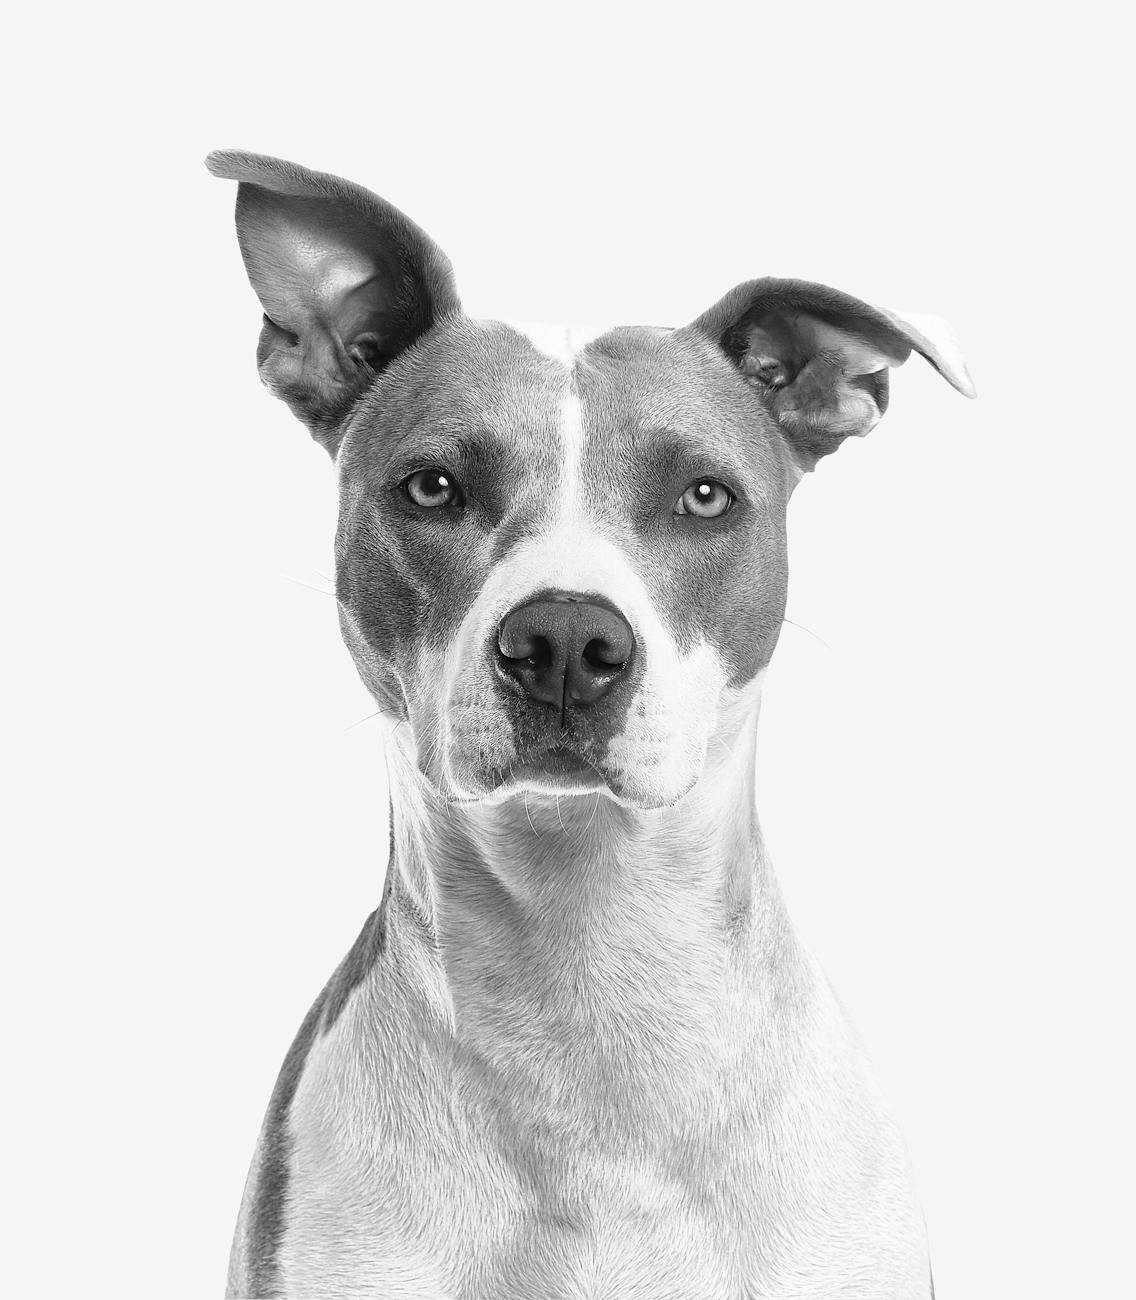 Fierce, black and white dog photo